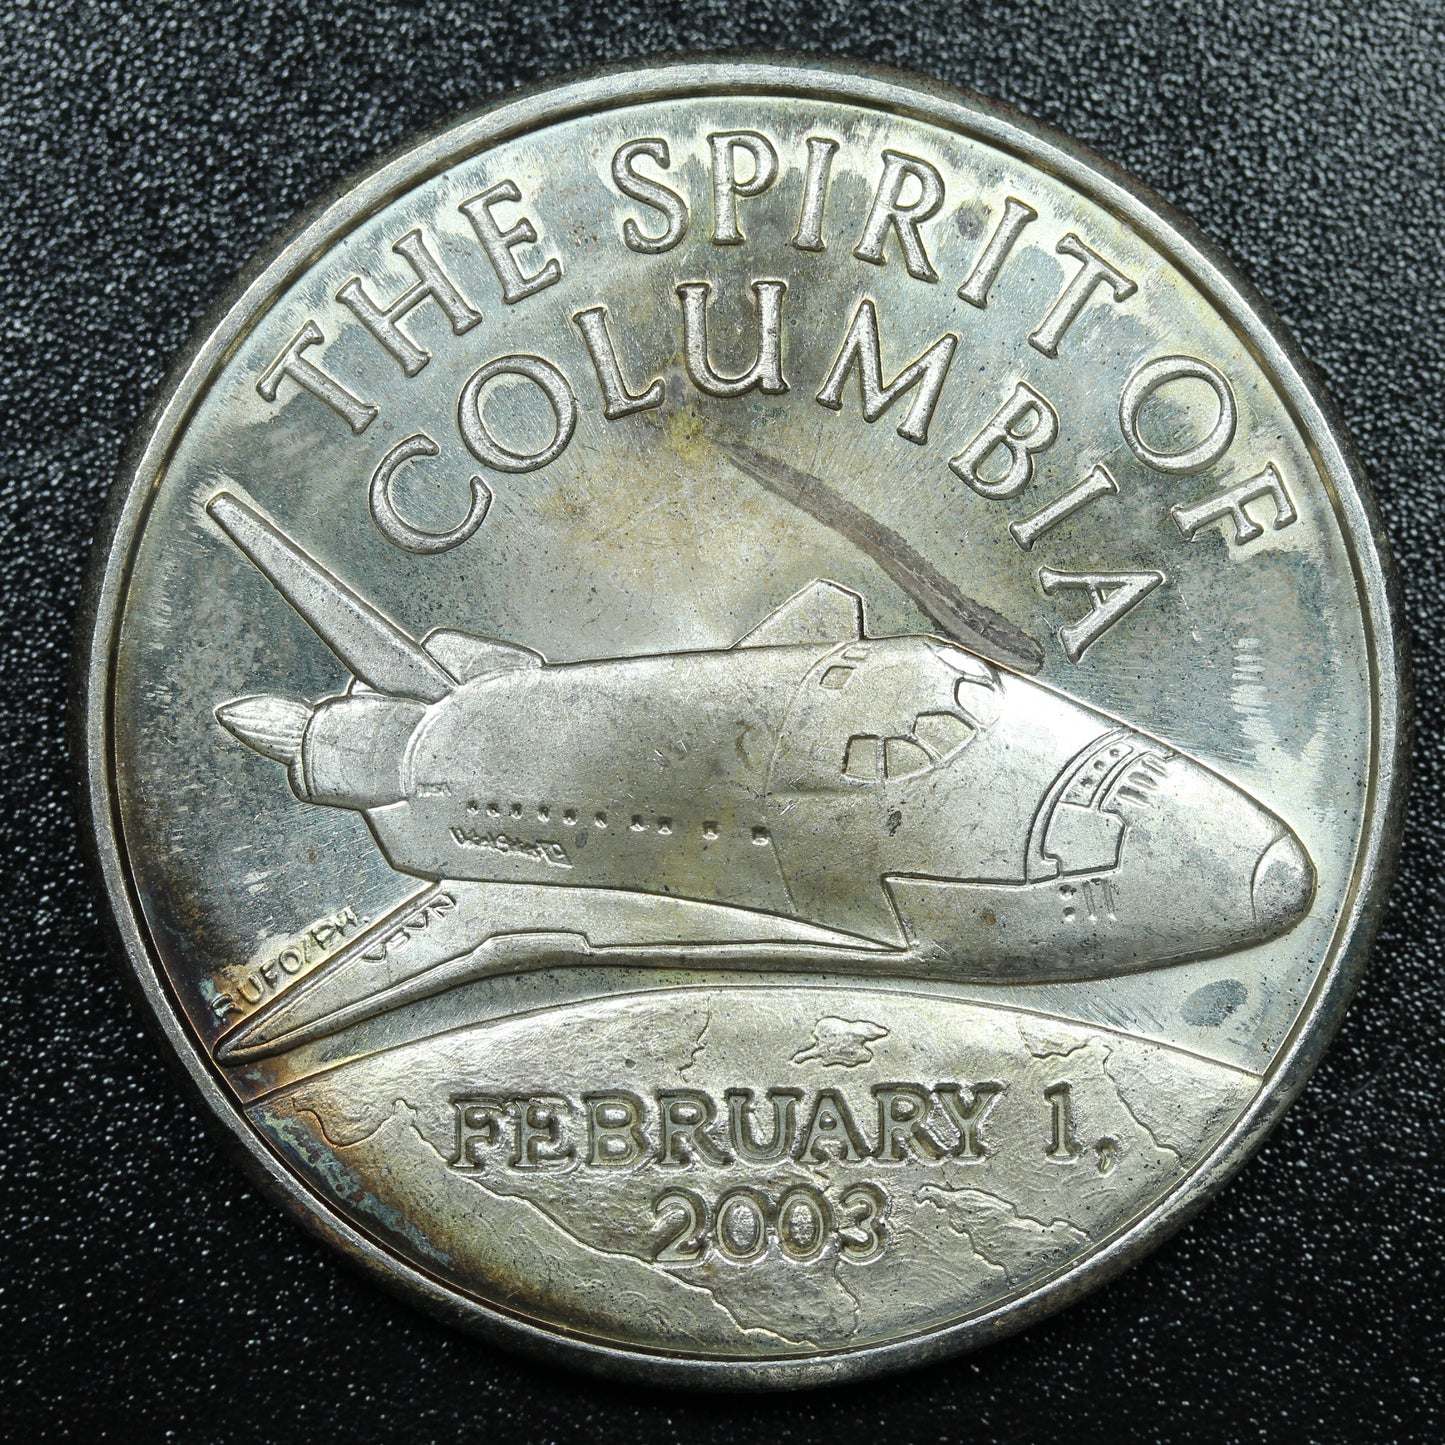 1 oz .999 Fine Silver - The Spirit of Columbia February 1, 2003